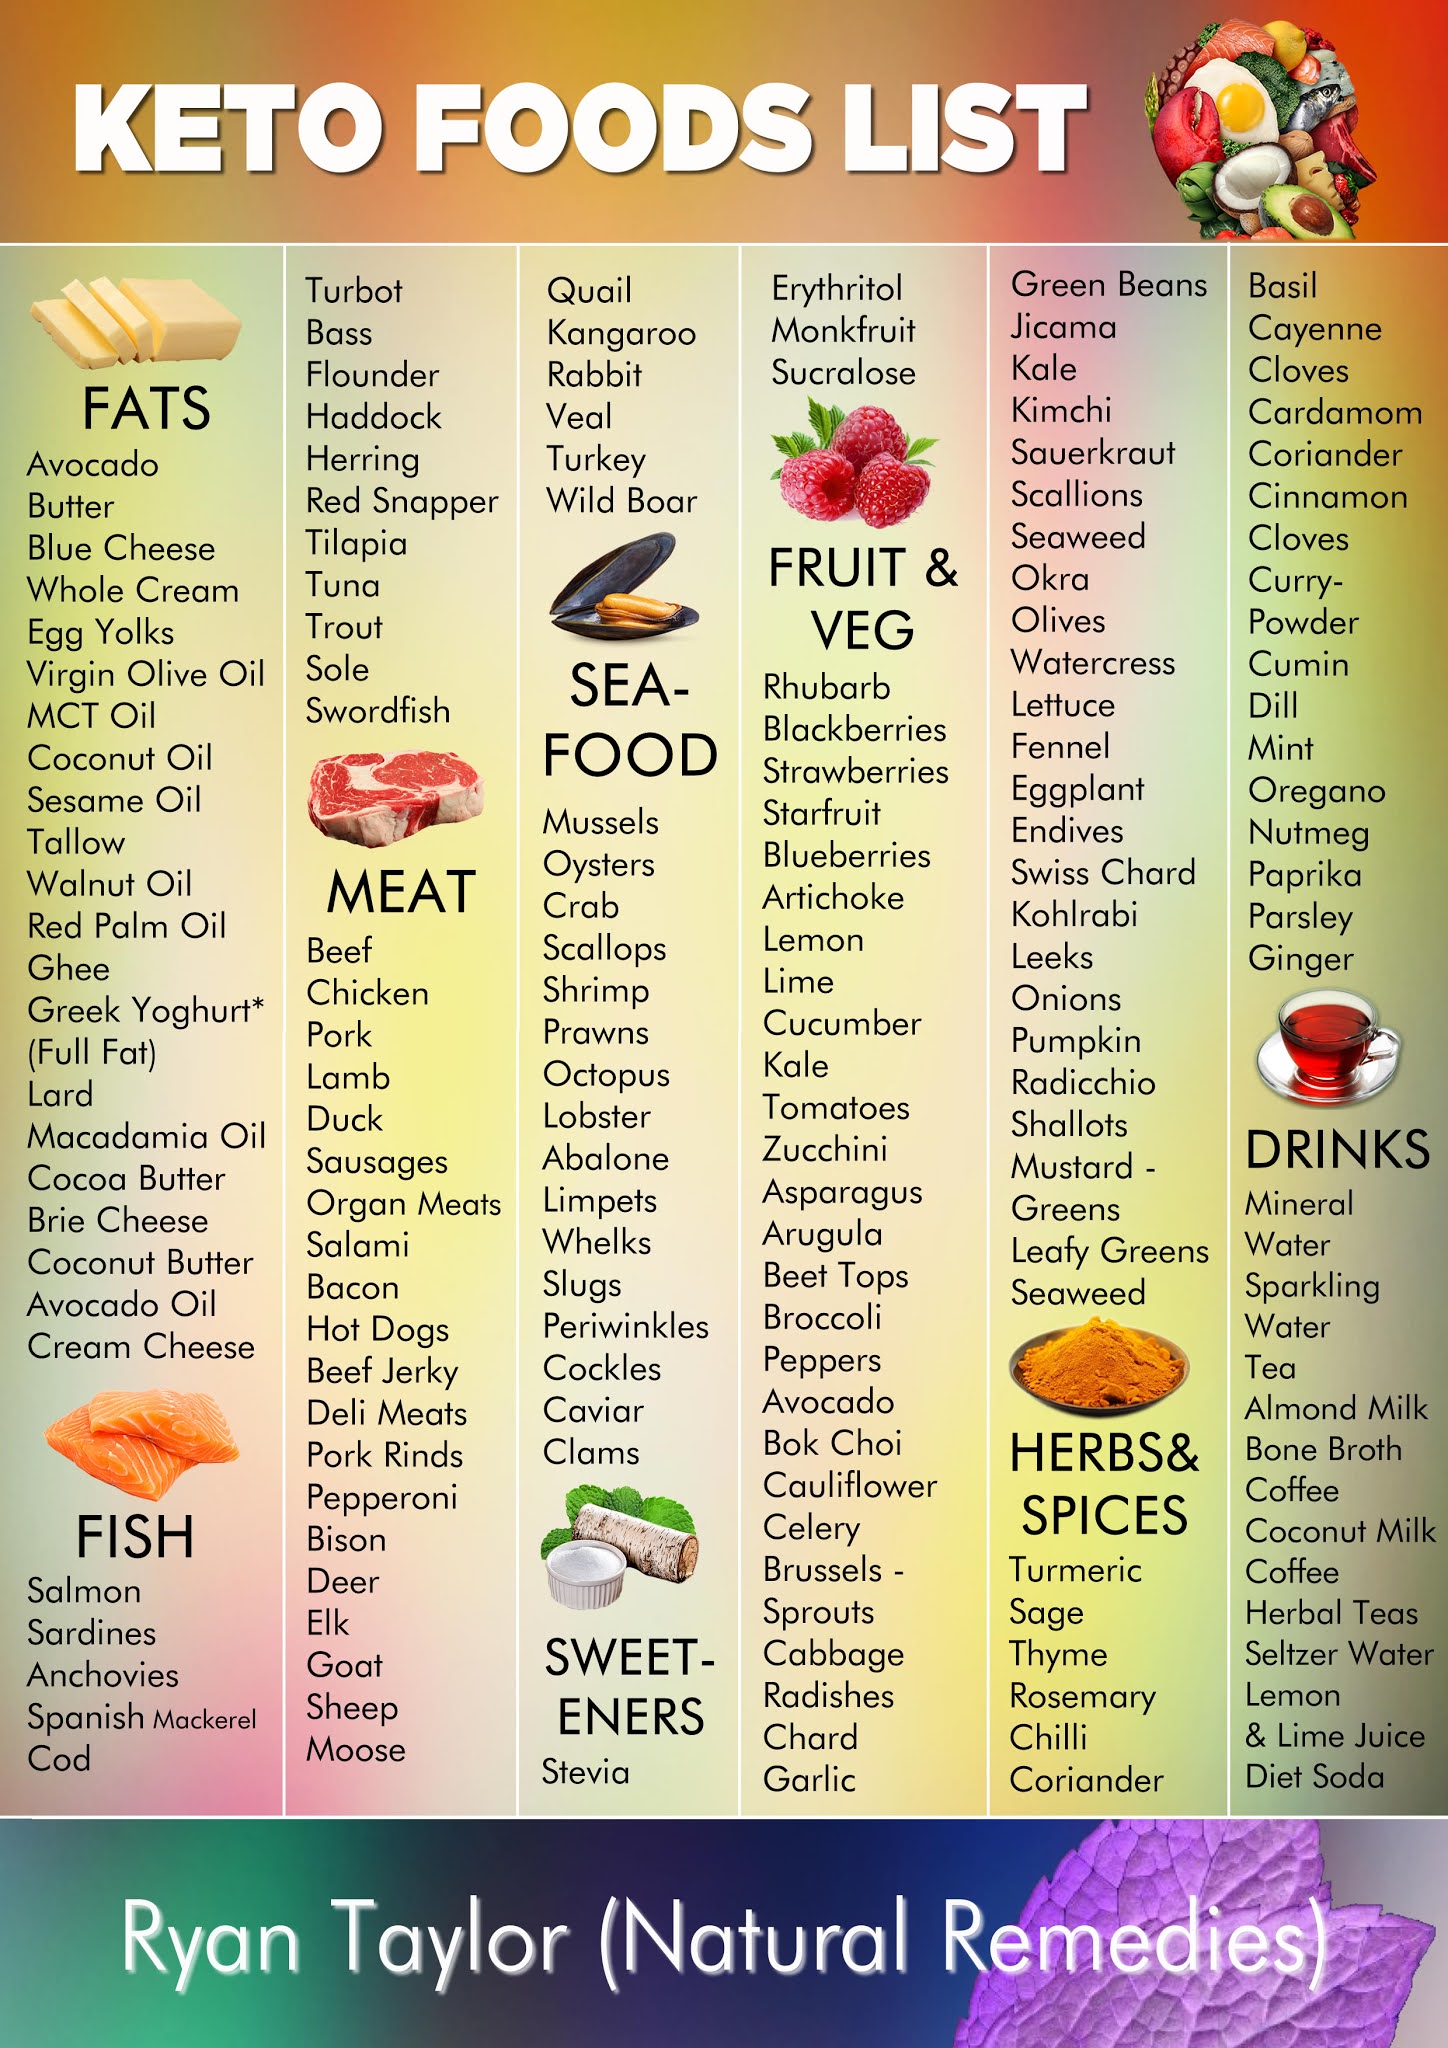 keto-foods-list-printable-192-low-carb-foods-ryan-taylor-natural